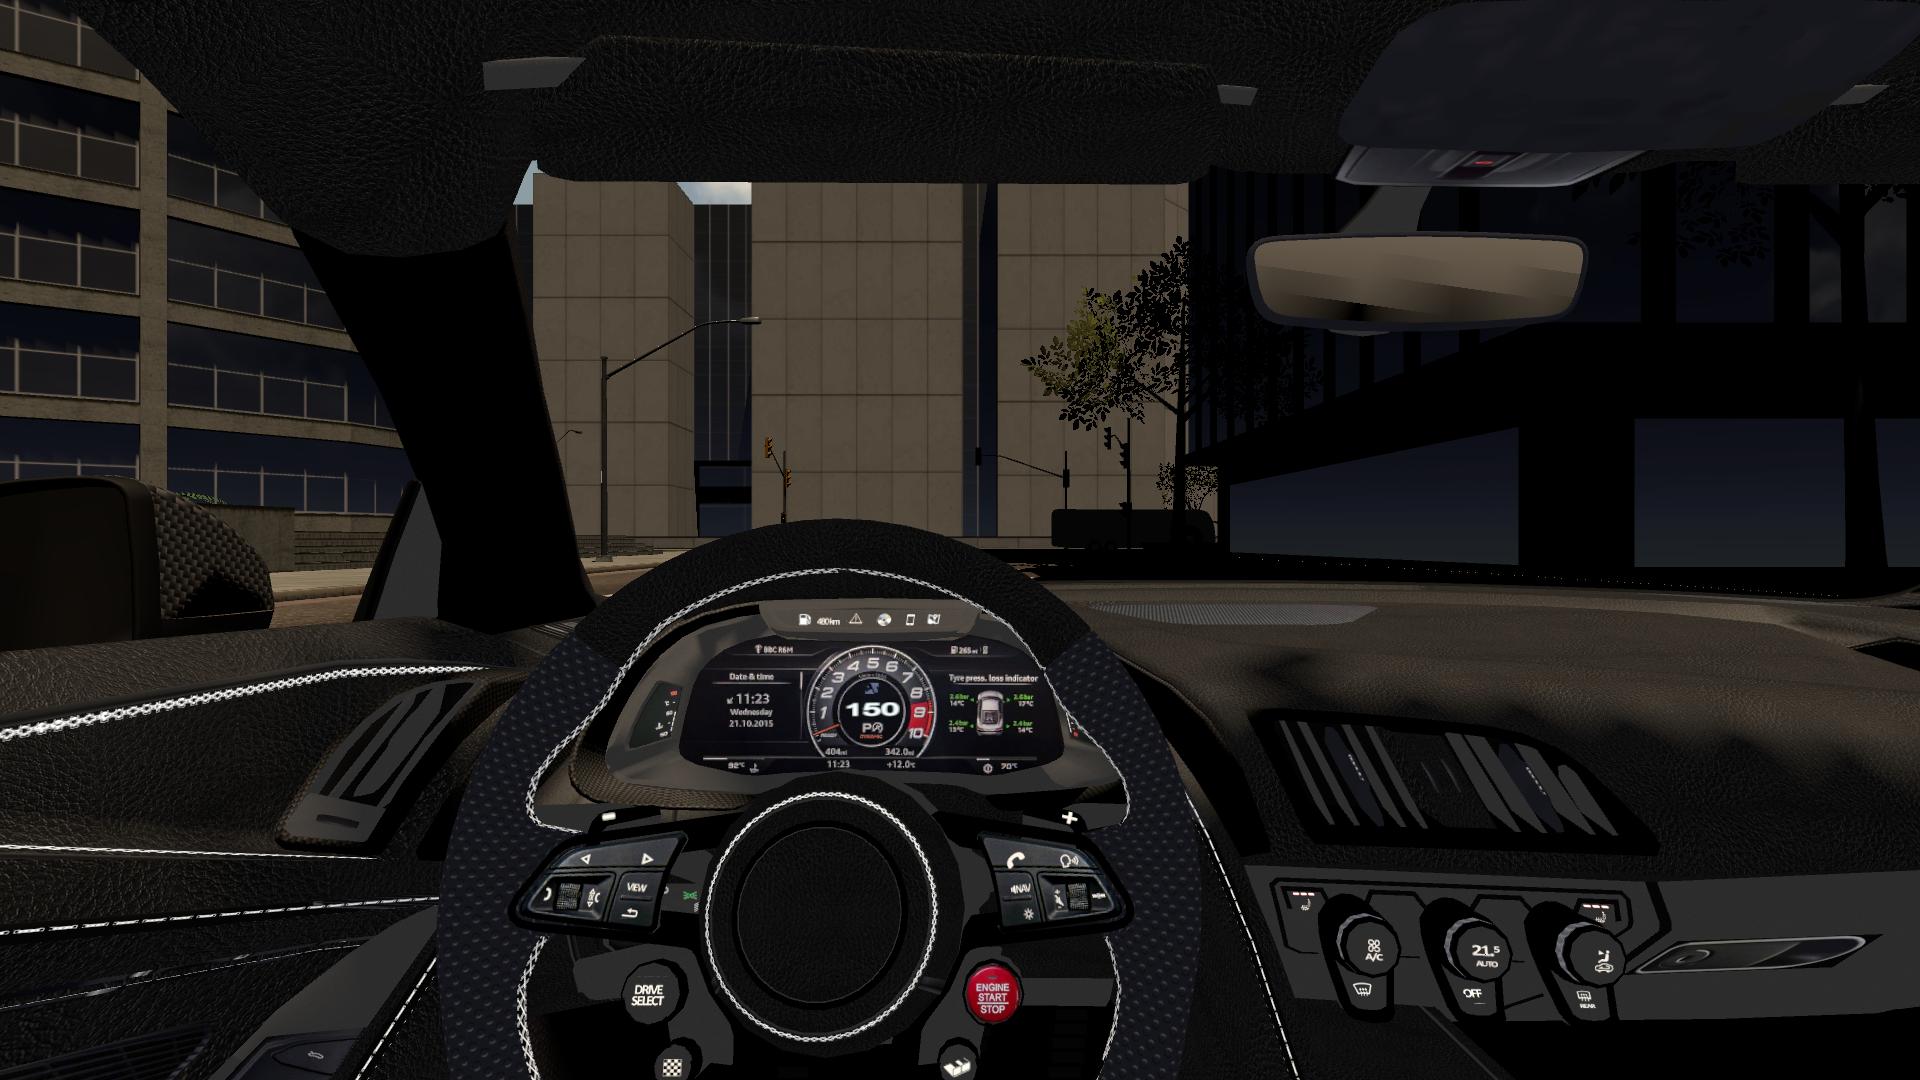 R8 Sport Racing Drive [2021] 4.0 Screenshot 4